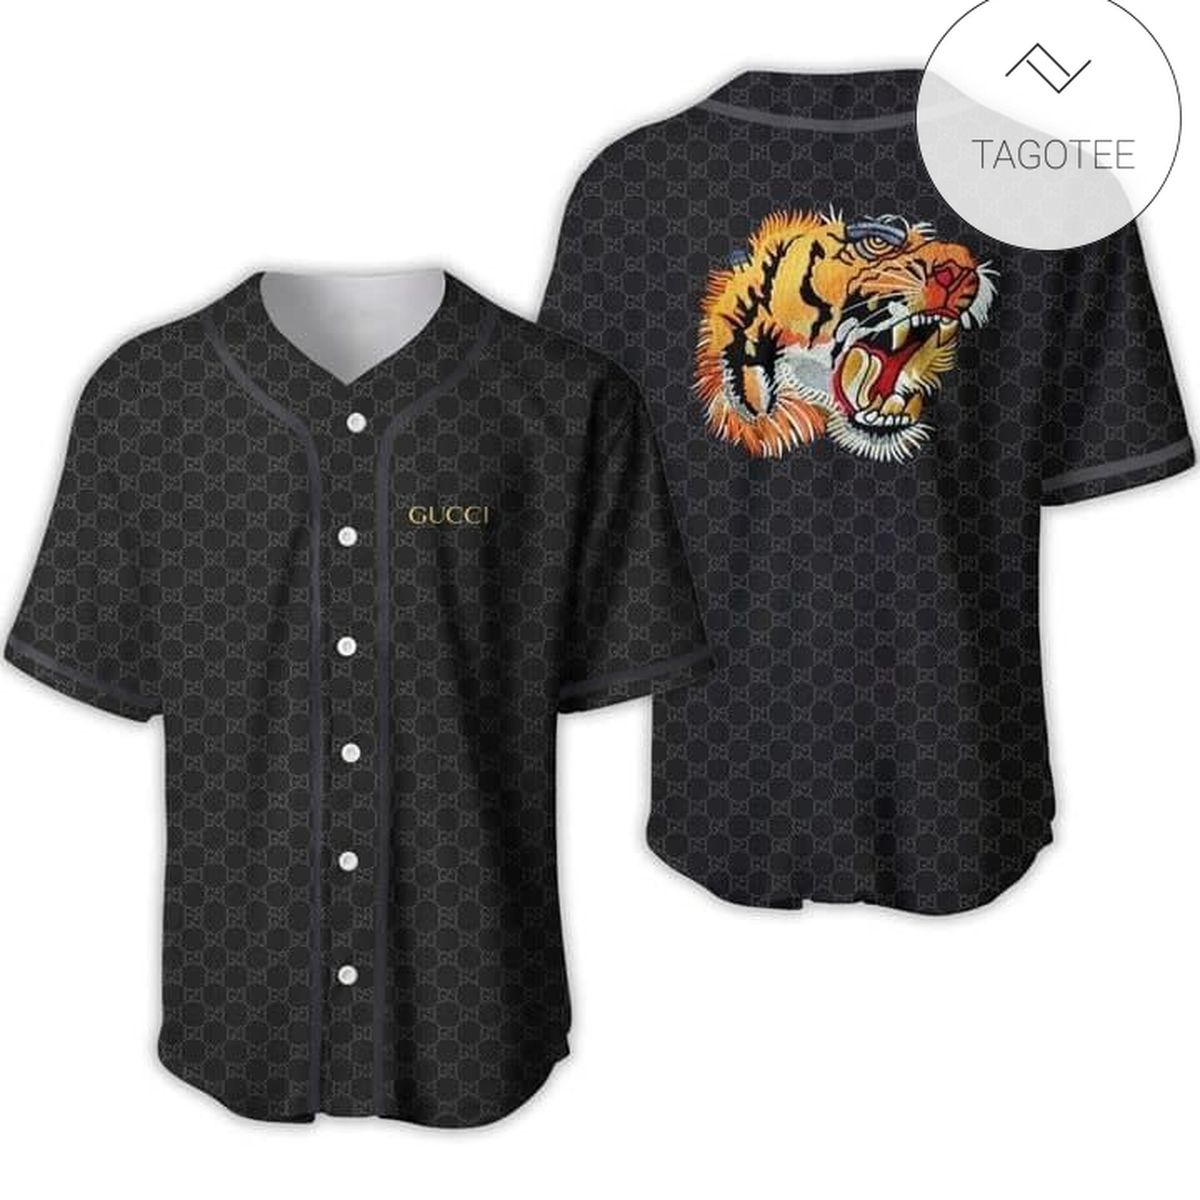 Gucci Tiger Baseball Jersey Shirt